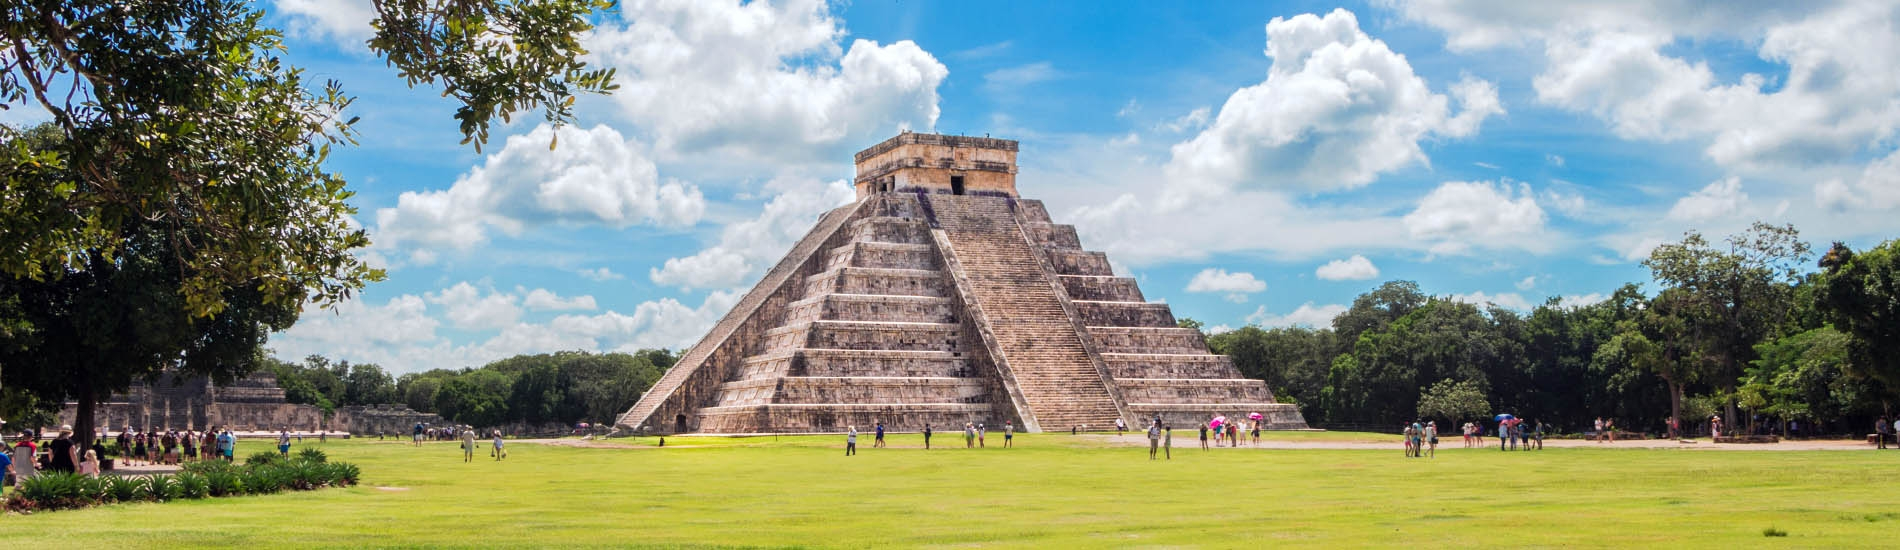 The ancient city of Chichen Itza in the Yucatan Peninsula